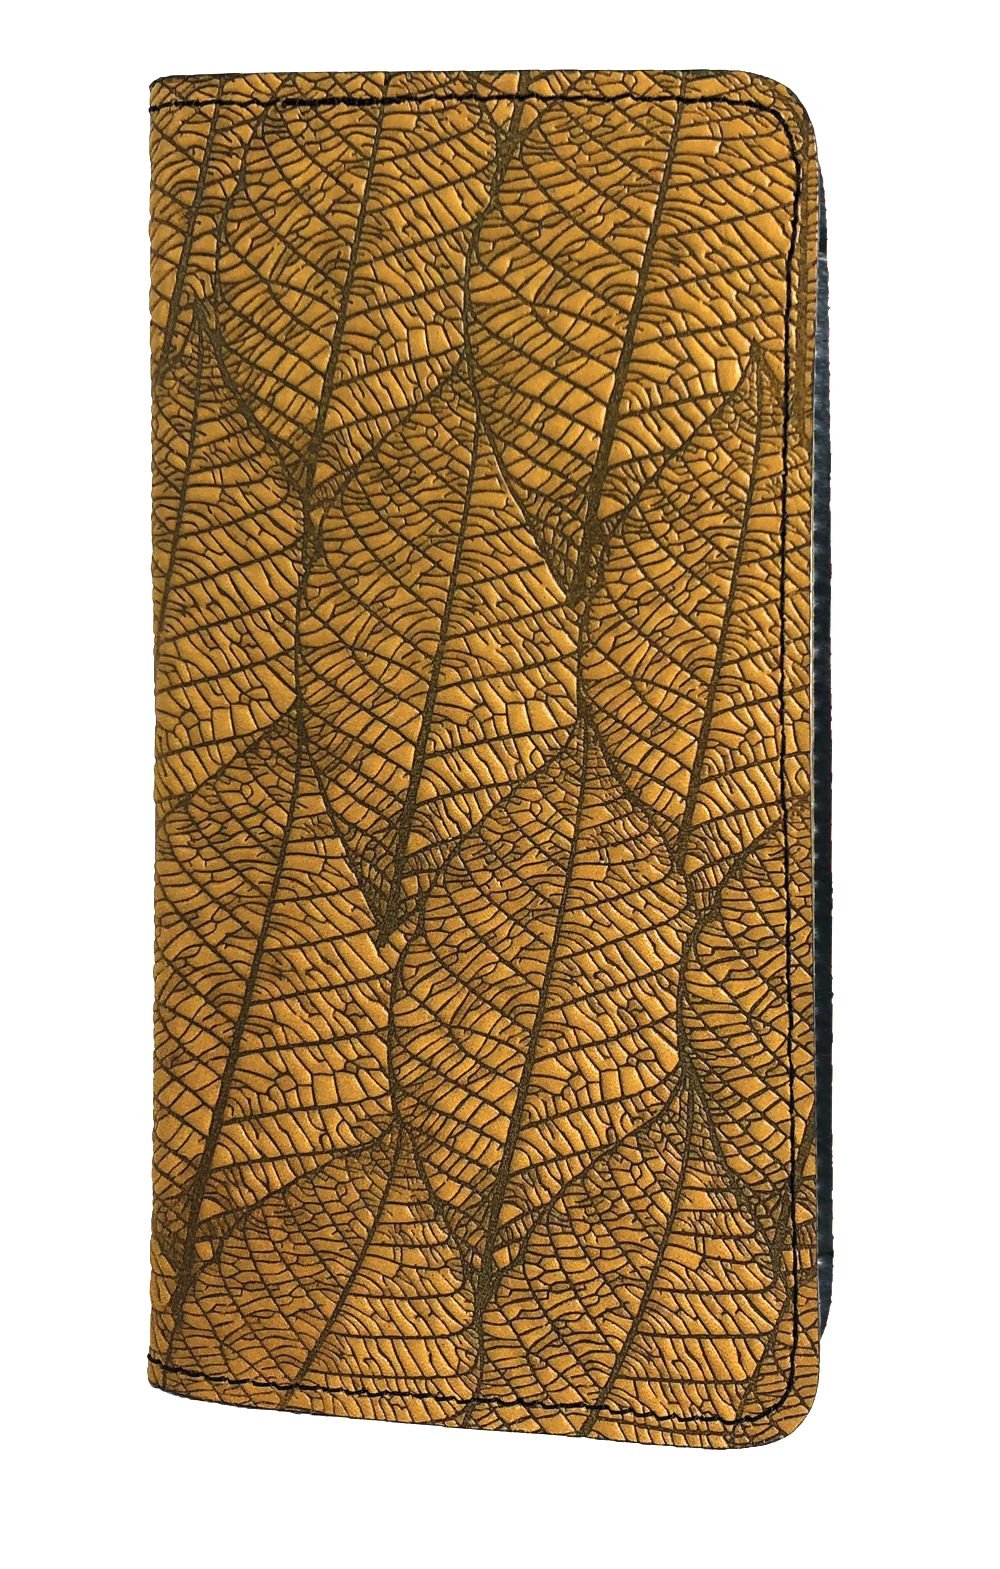 Oberon Design Small Oberon Design Small Leather Smartphone Wallet Case, Fallen Leaves in Marigold